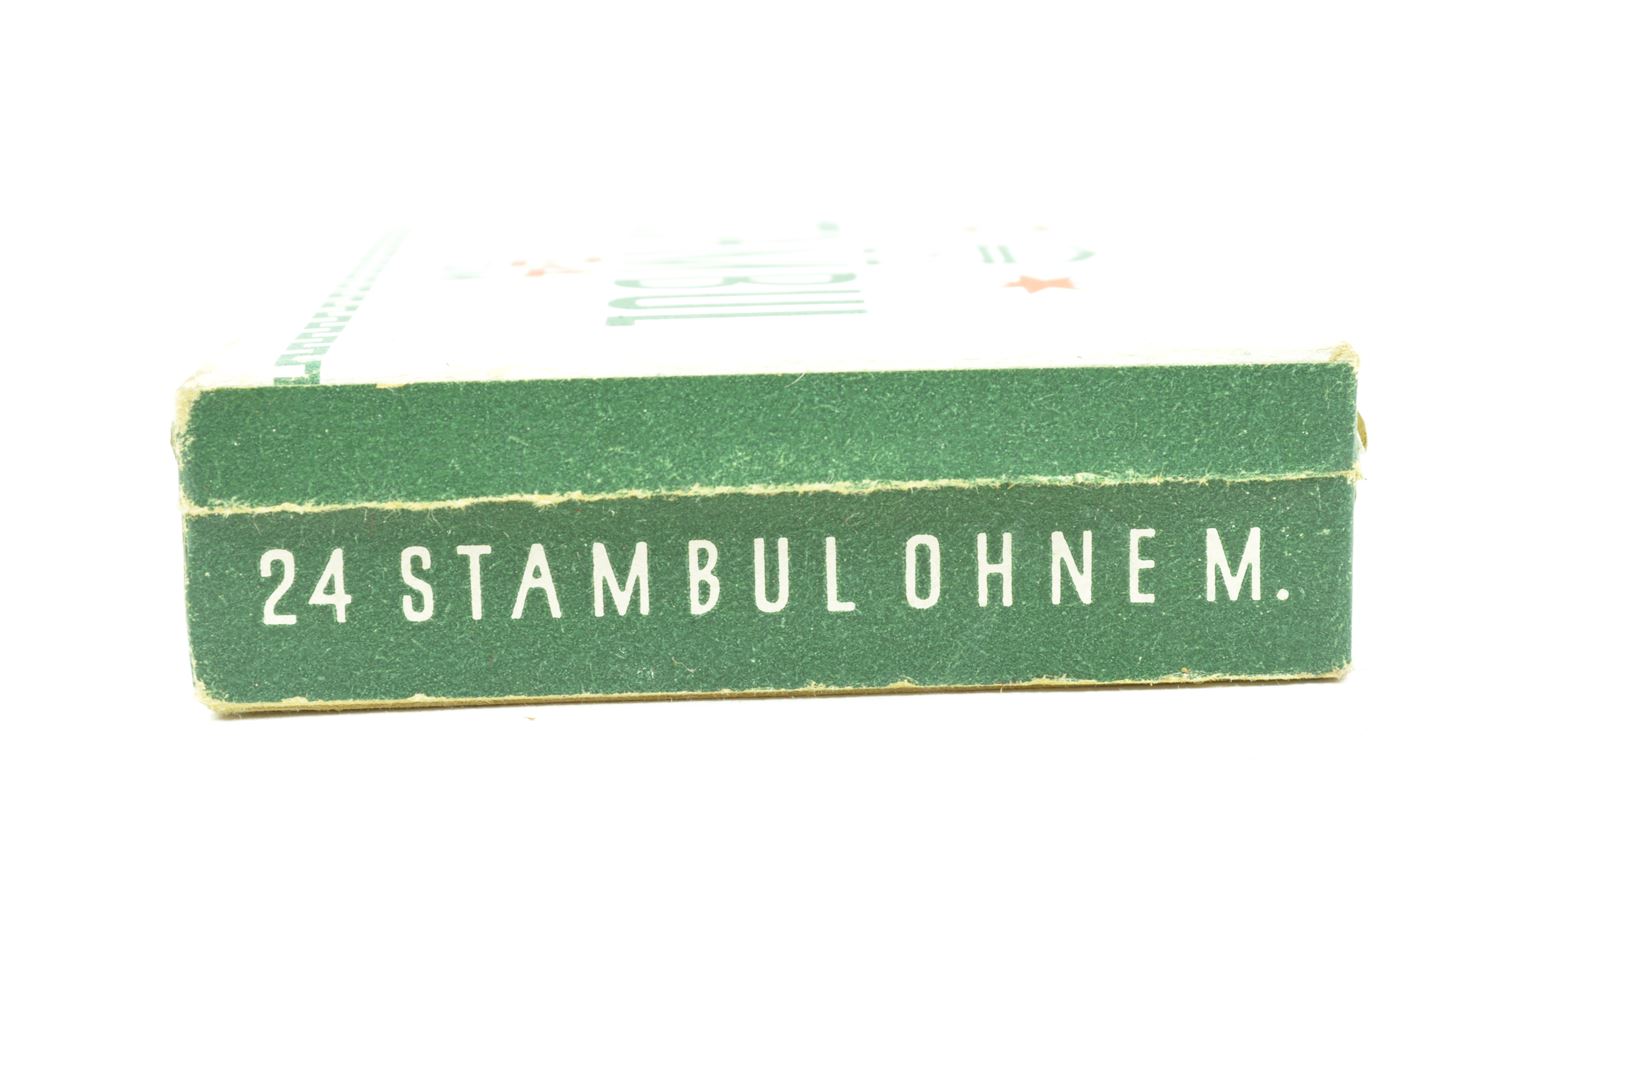 Paquet de cigarettes Allemandes " Stambul"